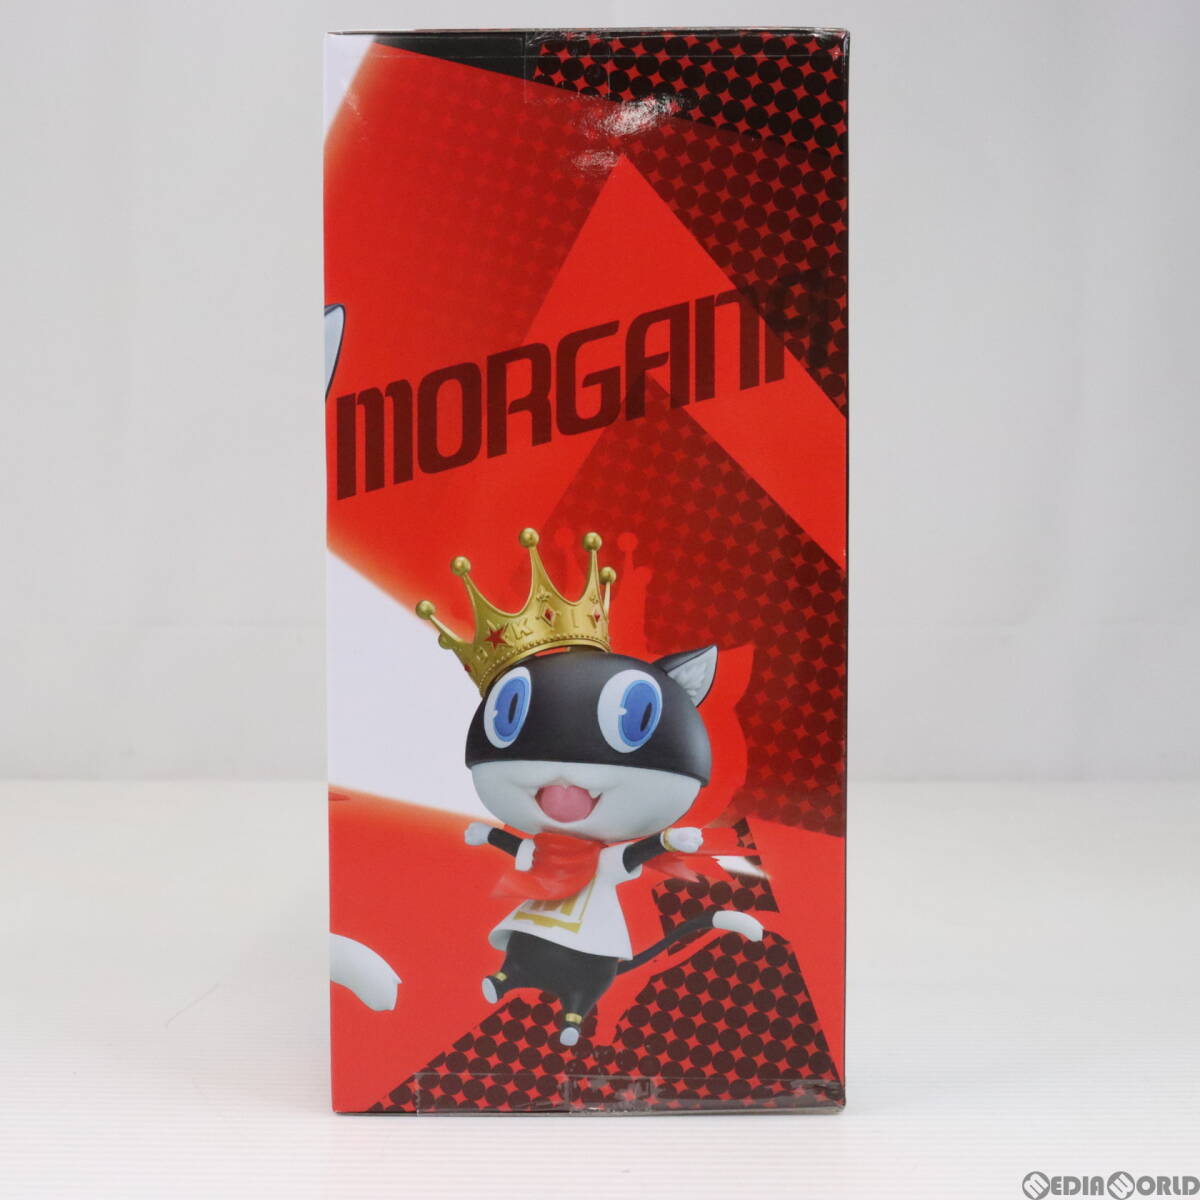 [ б/у ][FIG]morugana Persona 5 Dan sing* Star Night premium фигурка morugana приз (1110399) Sega (61730009)